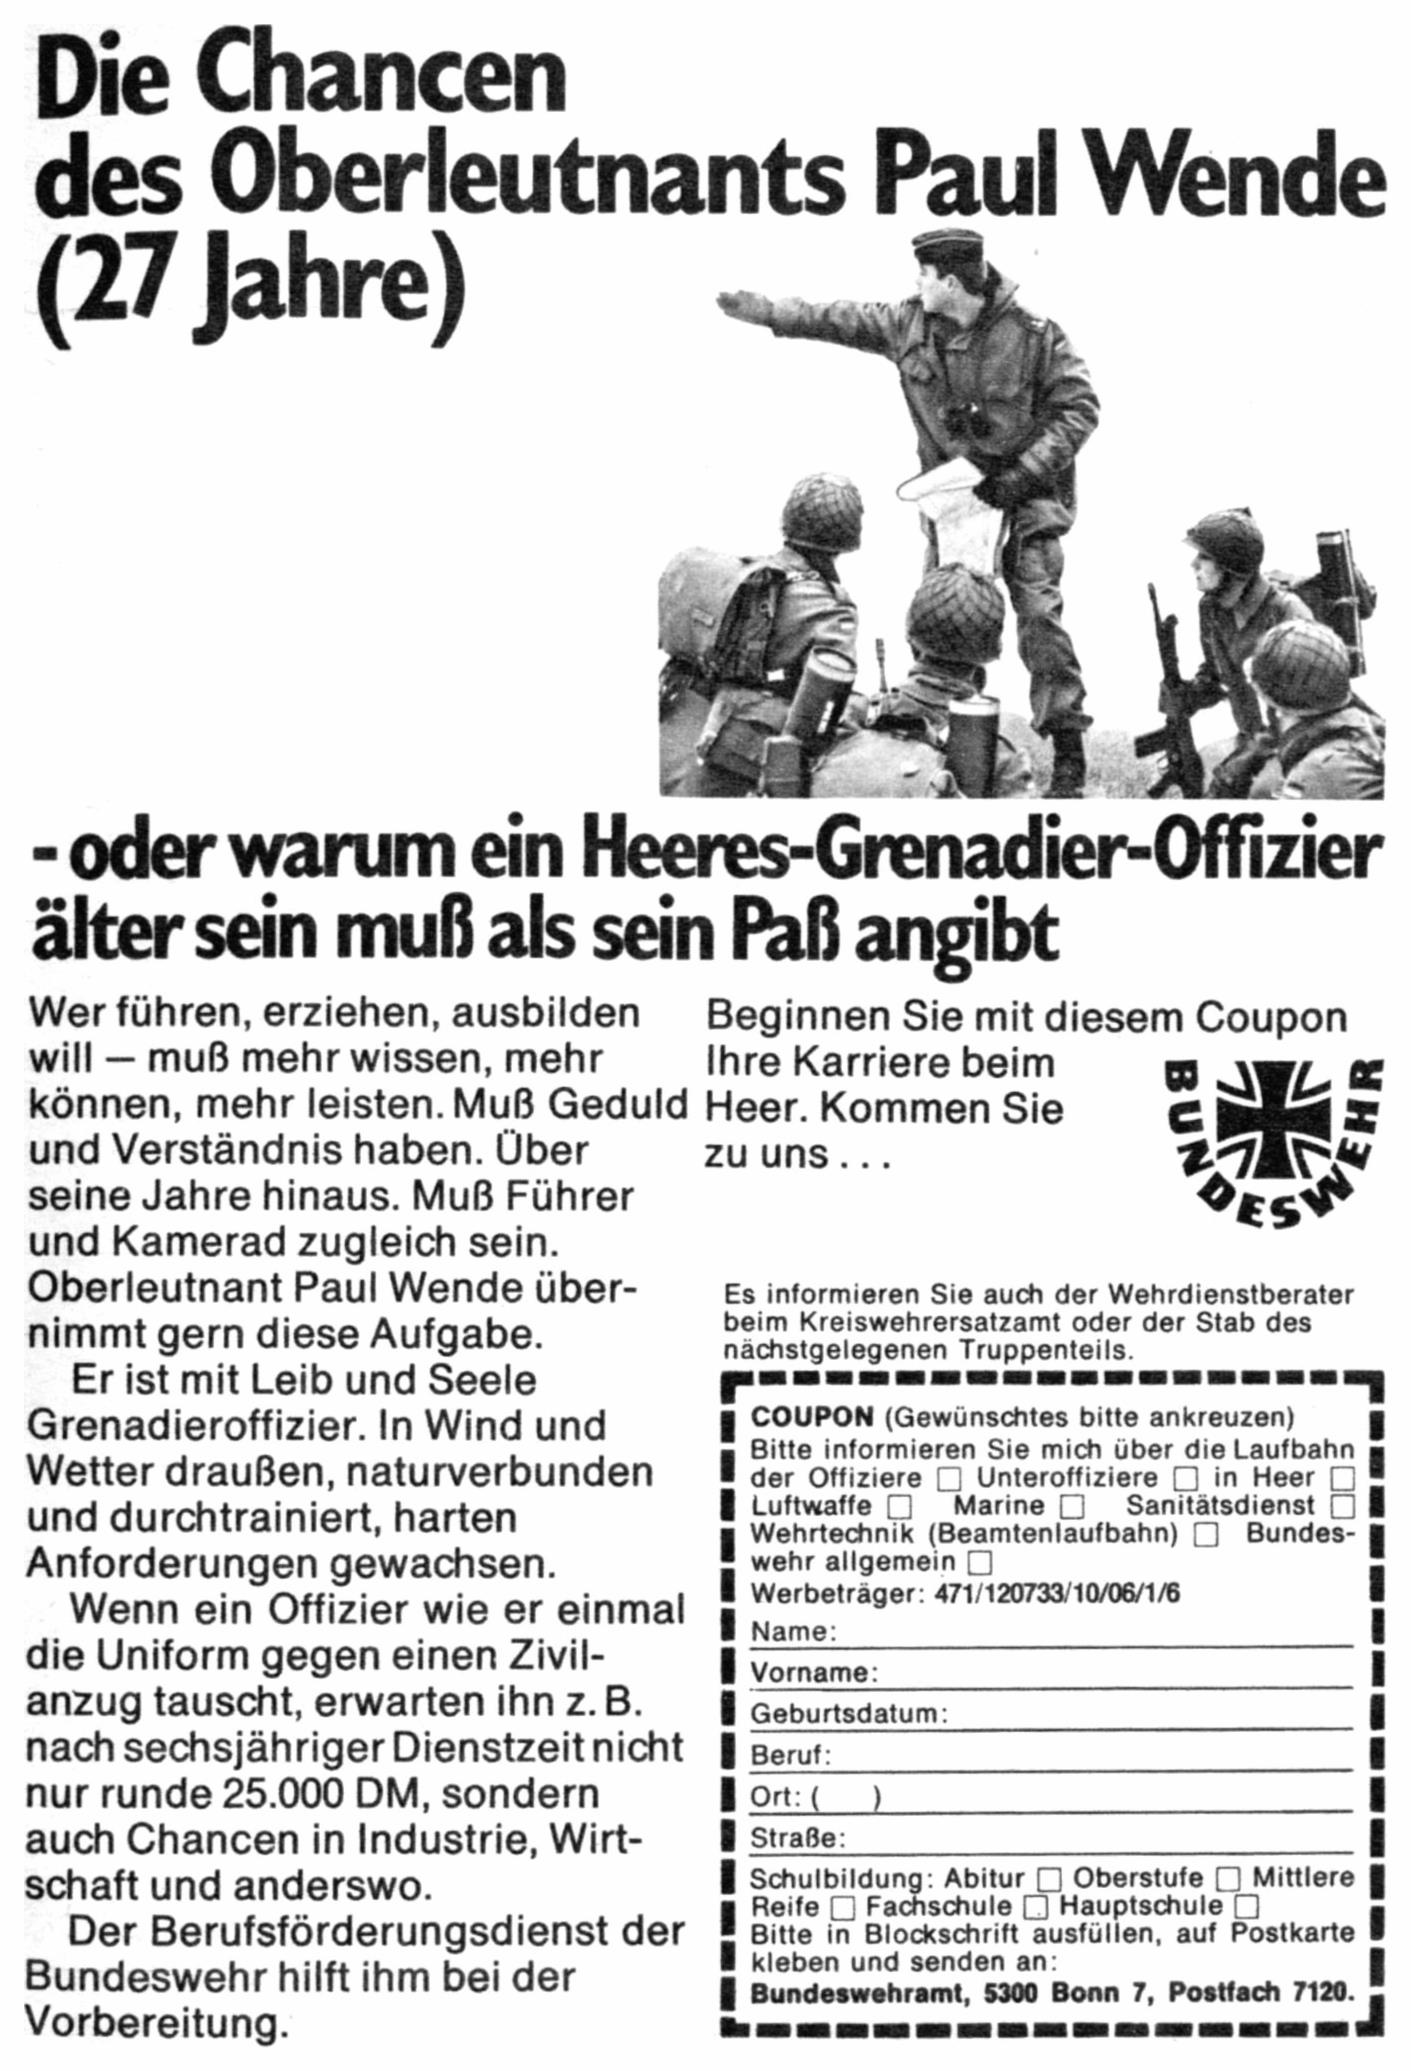 Bundeswehr 1972 0.jpg